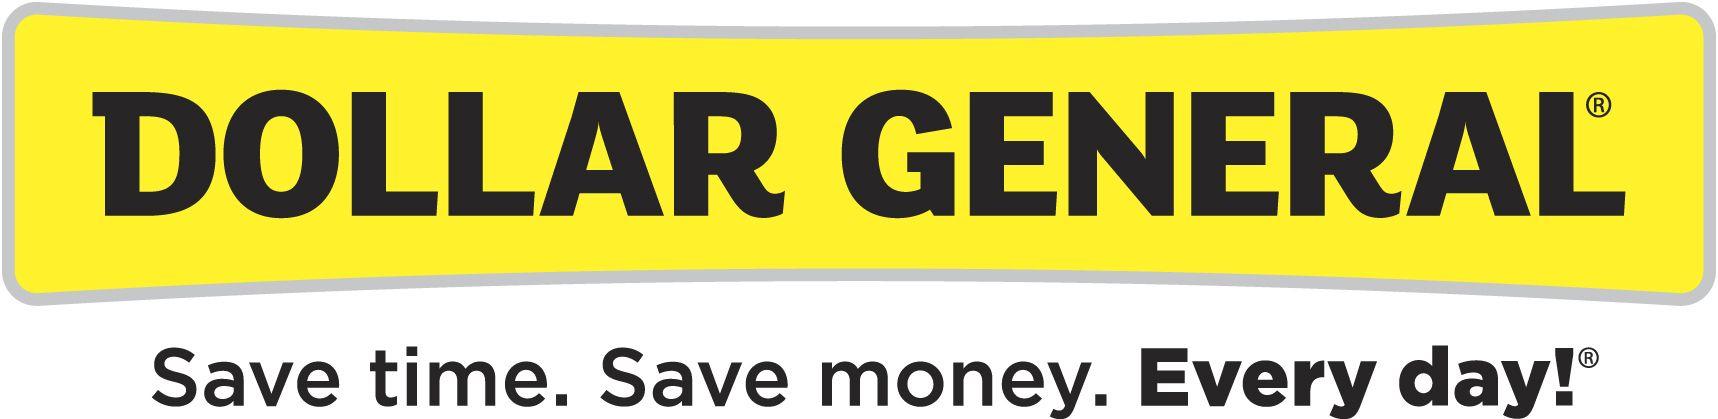 Dollar General DG Logo - Renegade Buggies App Launches, Makes Smart Spending Fun for Families